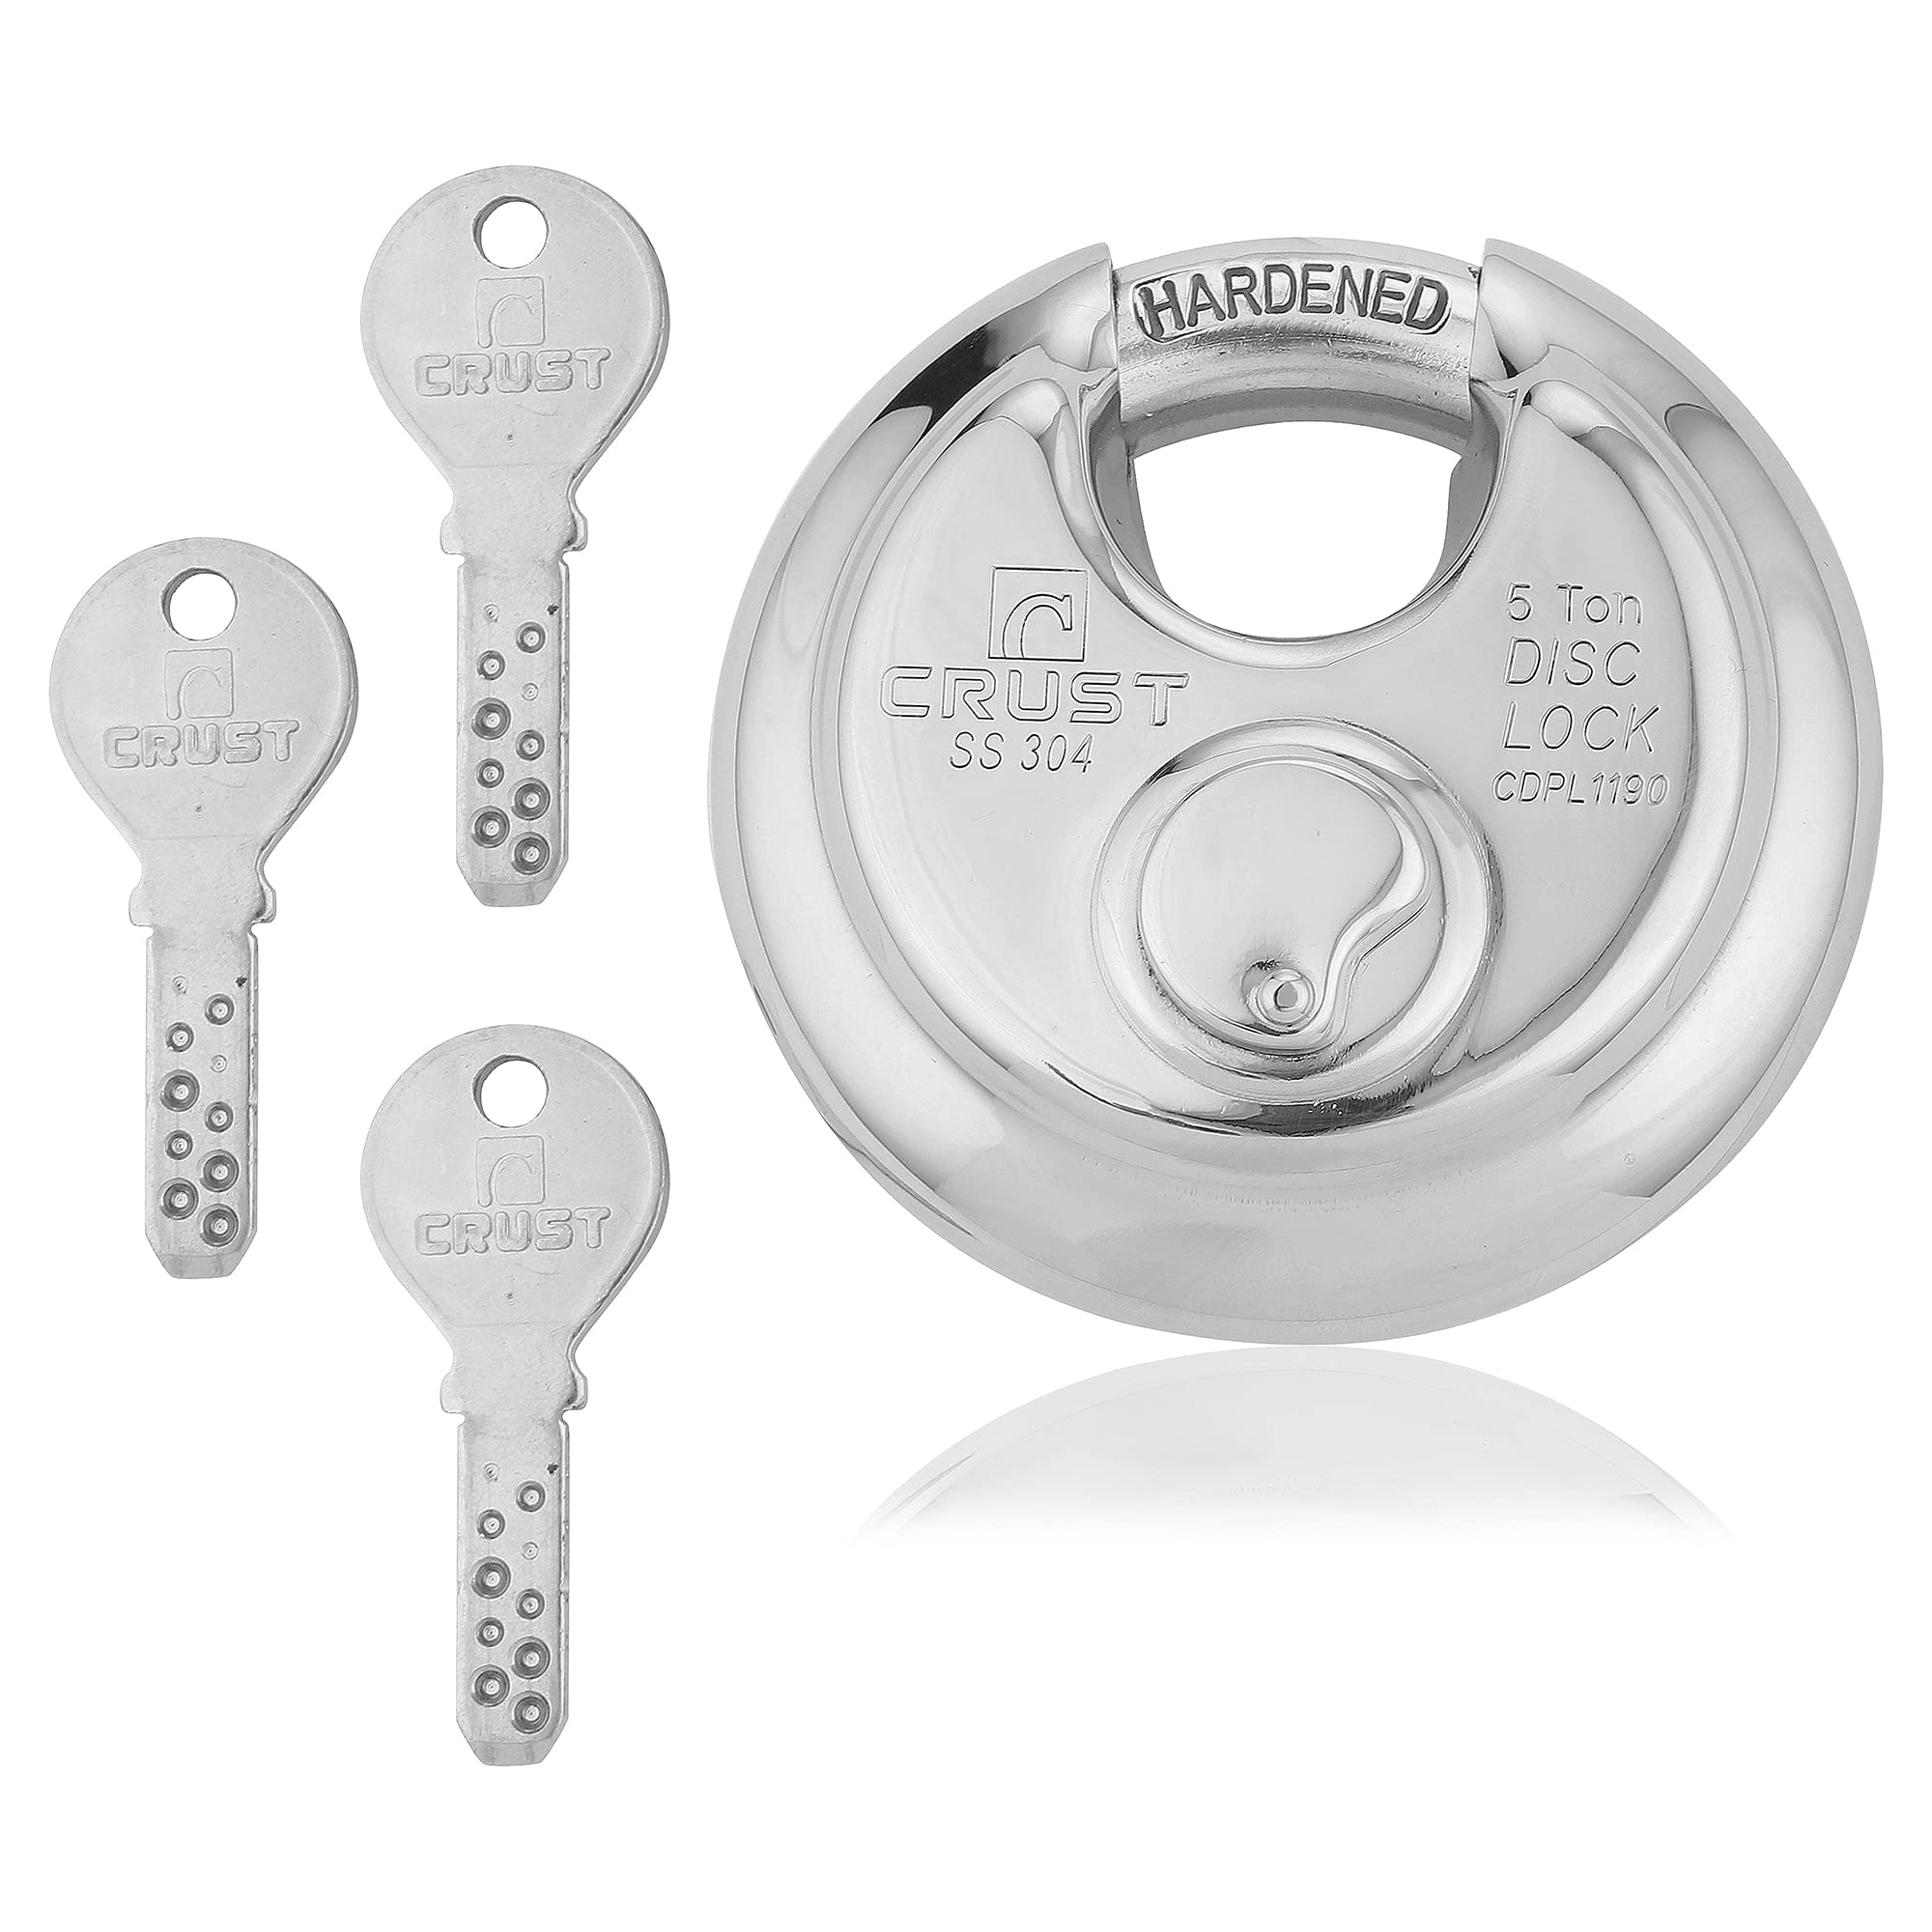 Crust Disc Pad Lock - 3 Keys (Large) 90MM Silver, Stainless Steel